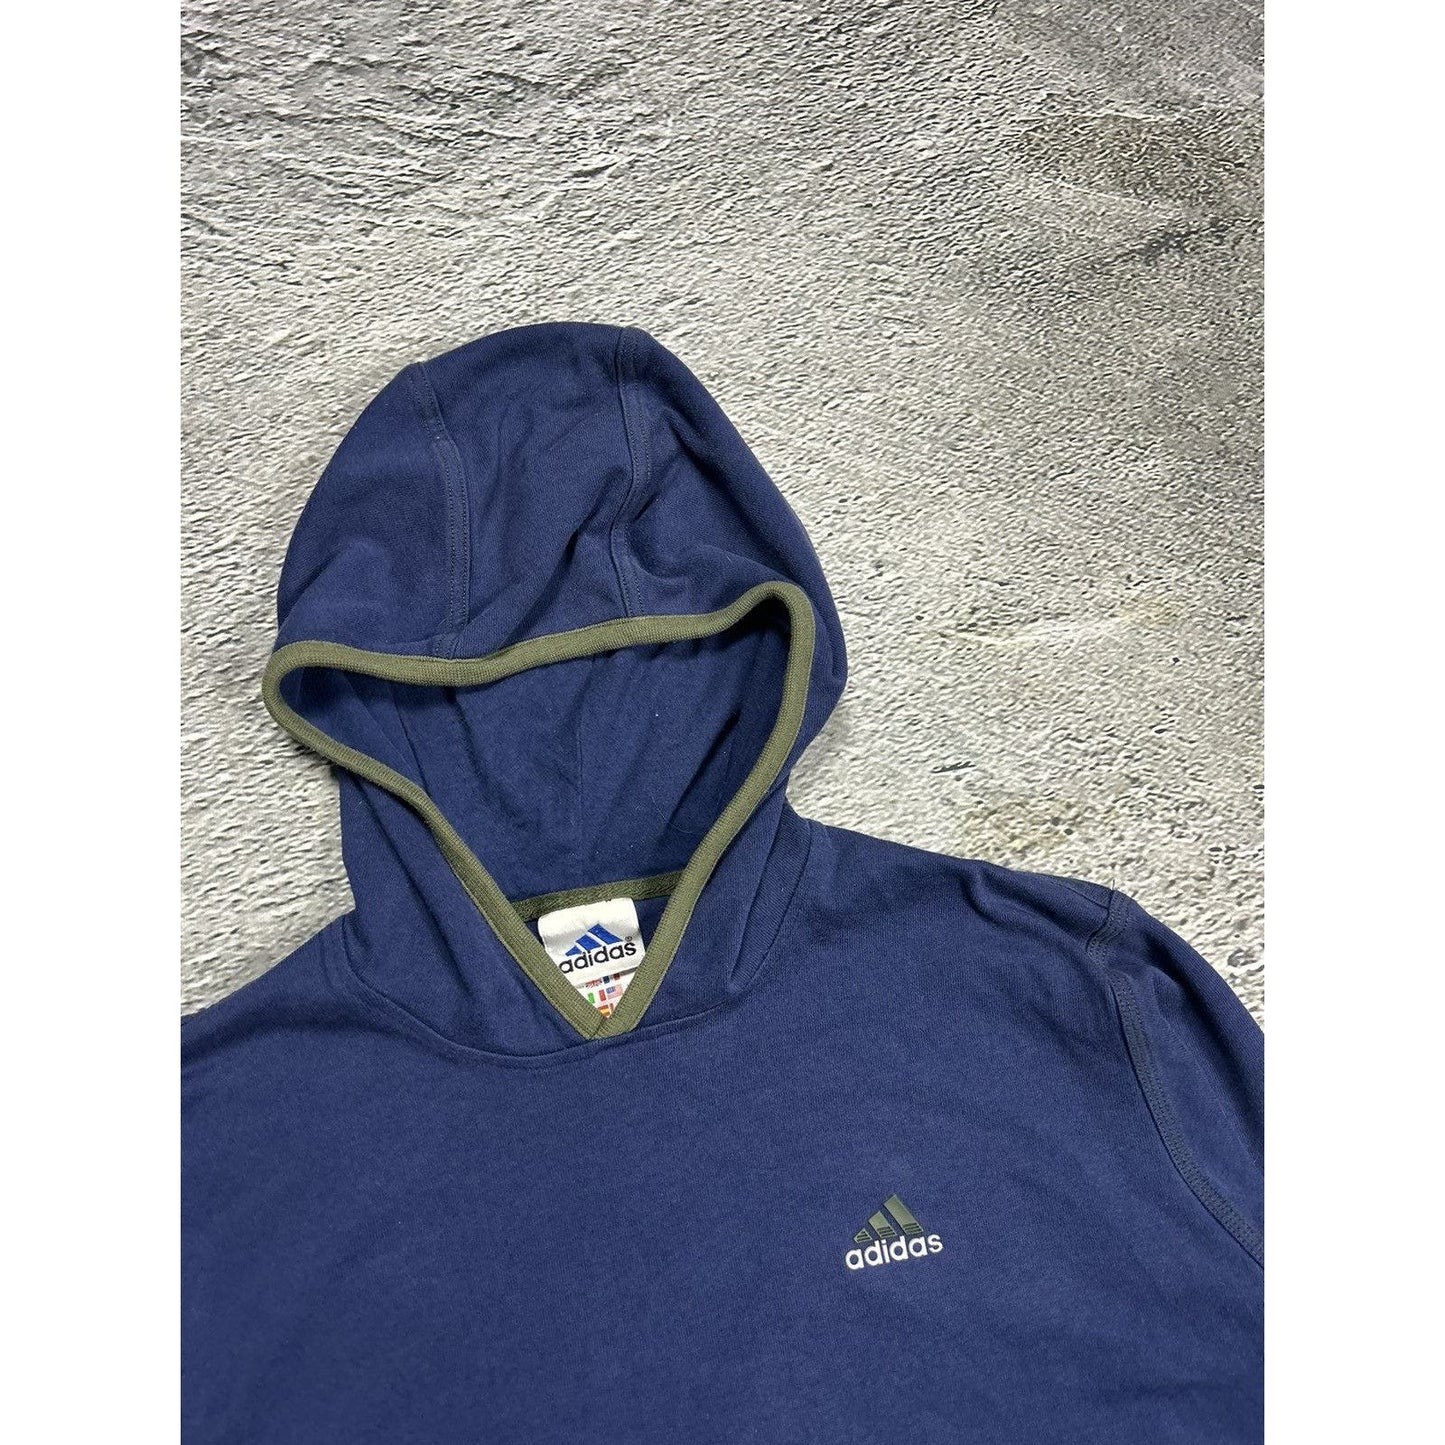 Adidas hoodie navy khaki vintage sweatshirt